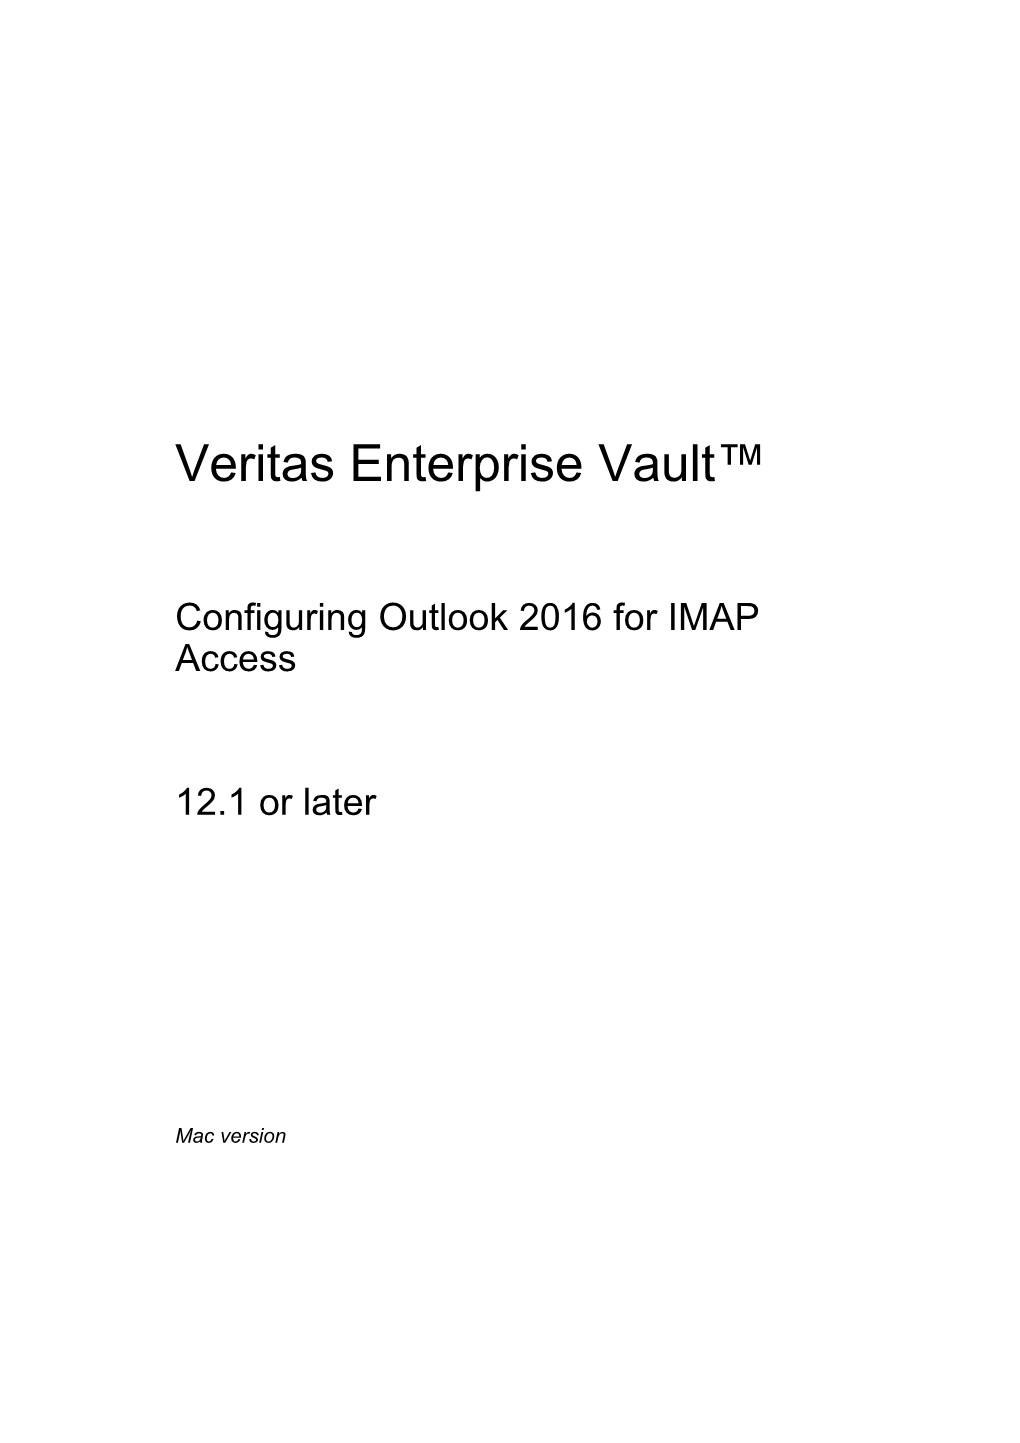 Veritas Enterprise Vault : Configuring Outlook 2016 for IMAP Access